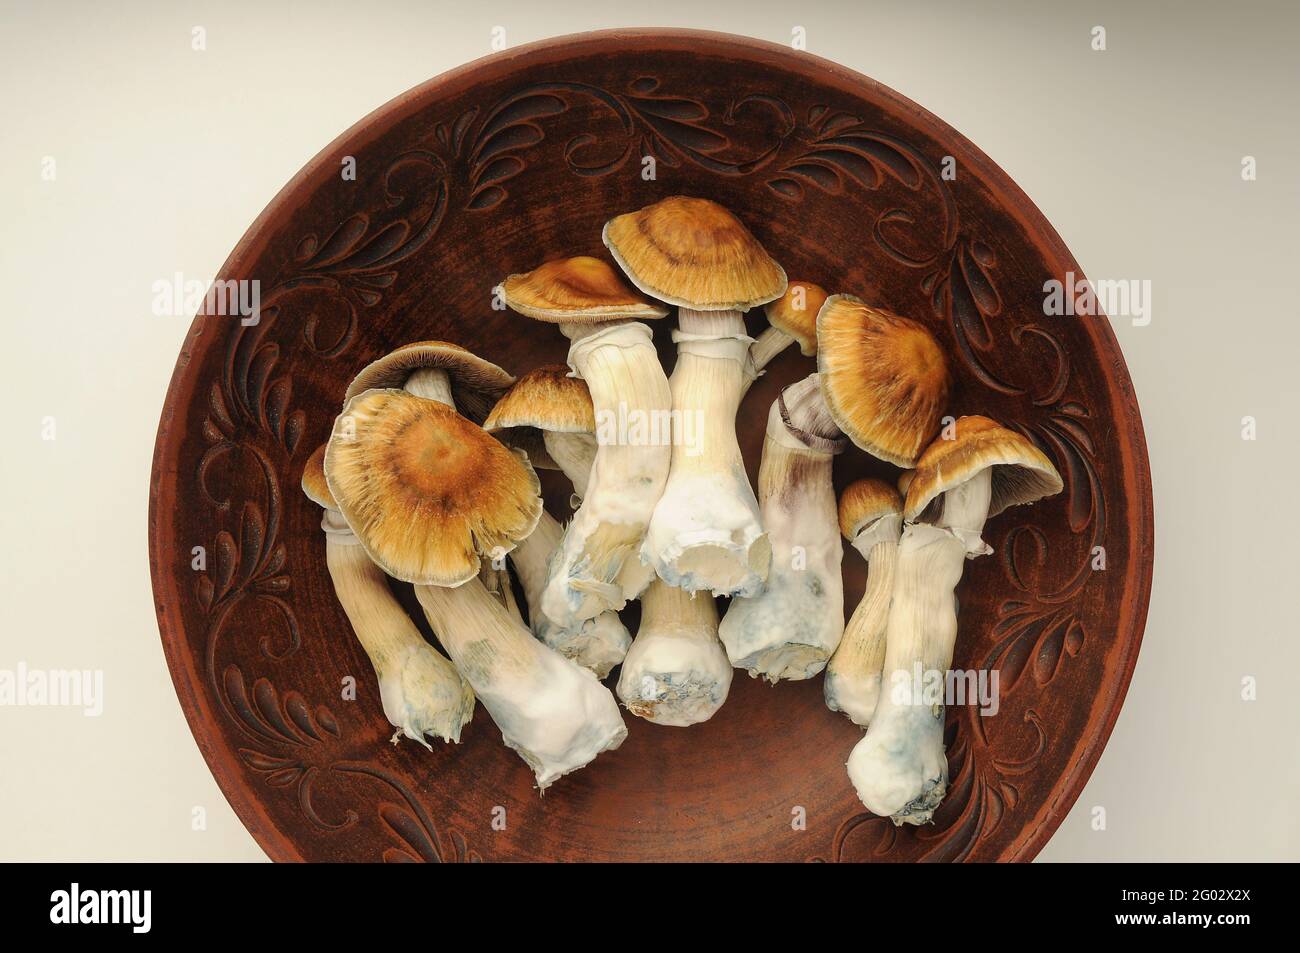 Psychedelic psilocybin mushrooms Golden Teacher, top view, close-up. Psilocybe Cubensis raw mushrooms in brown dish. Micro-dosing concept. Stock Photo